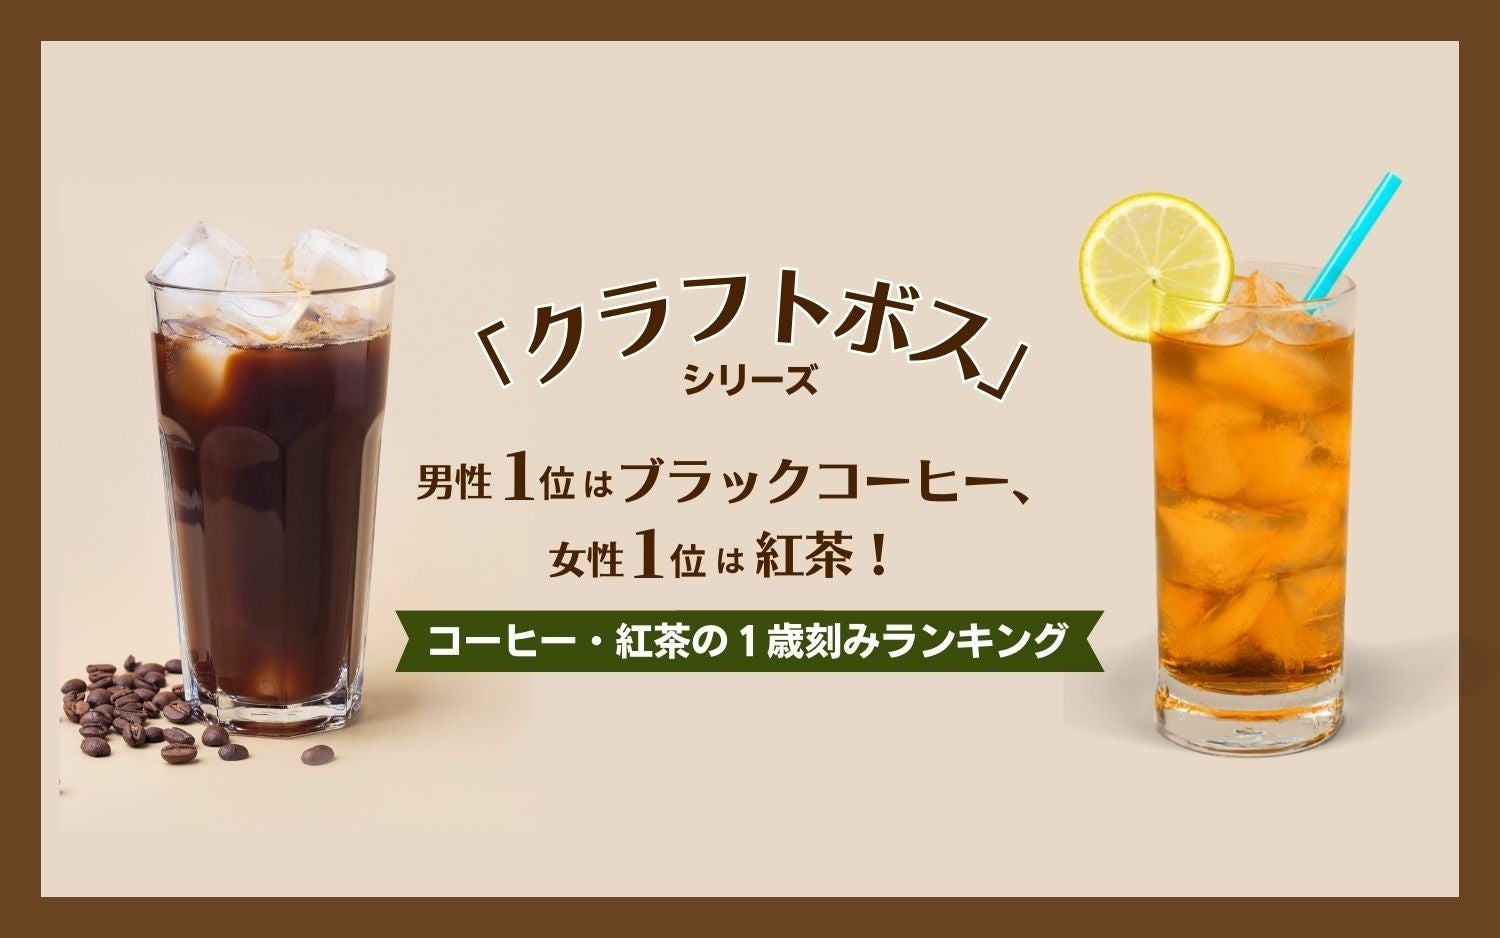 Mr. CHEESECAKEから、香り豊かなお茶フレーバー3種「Mr. CHEESECAKE Tea Collection」が新登場